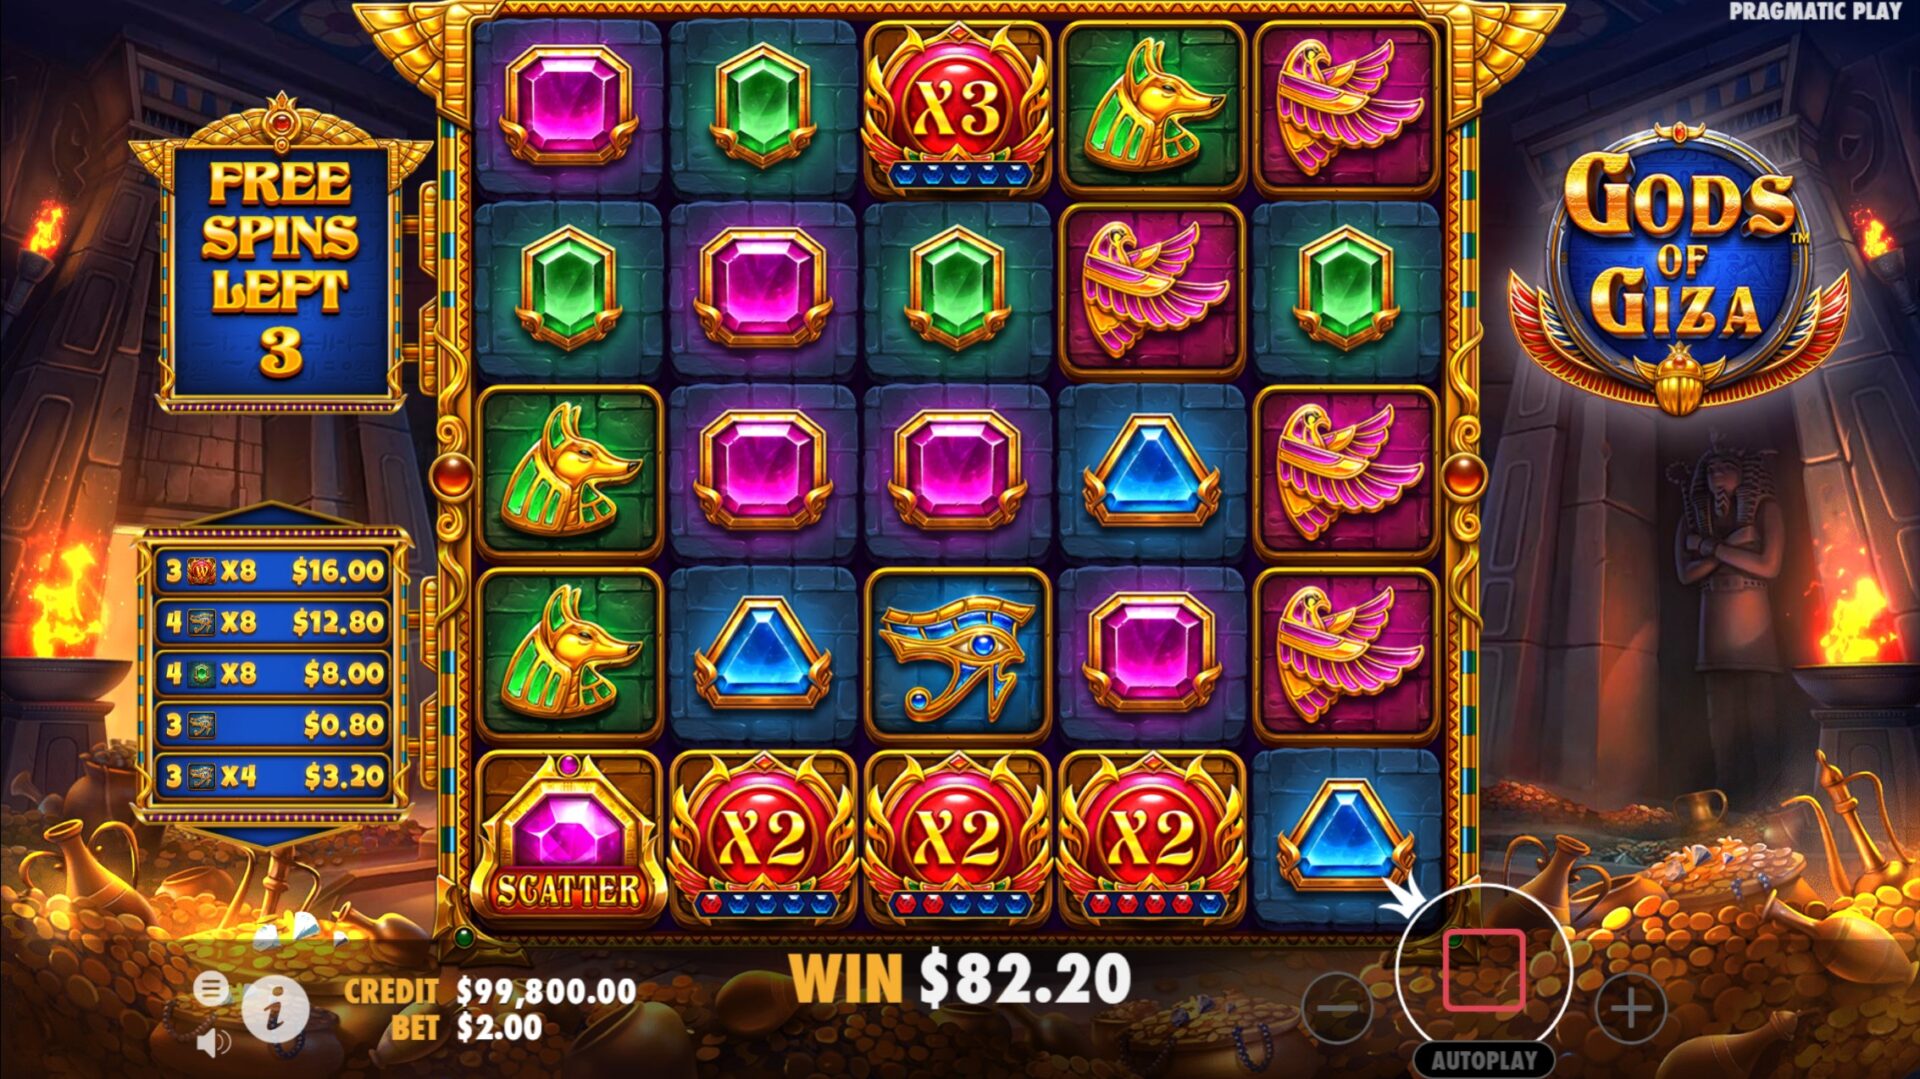 Gods of Giza Slot - Free Spins Bonus